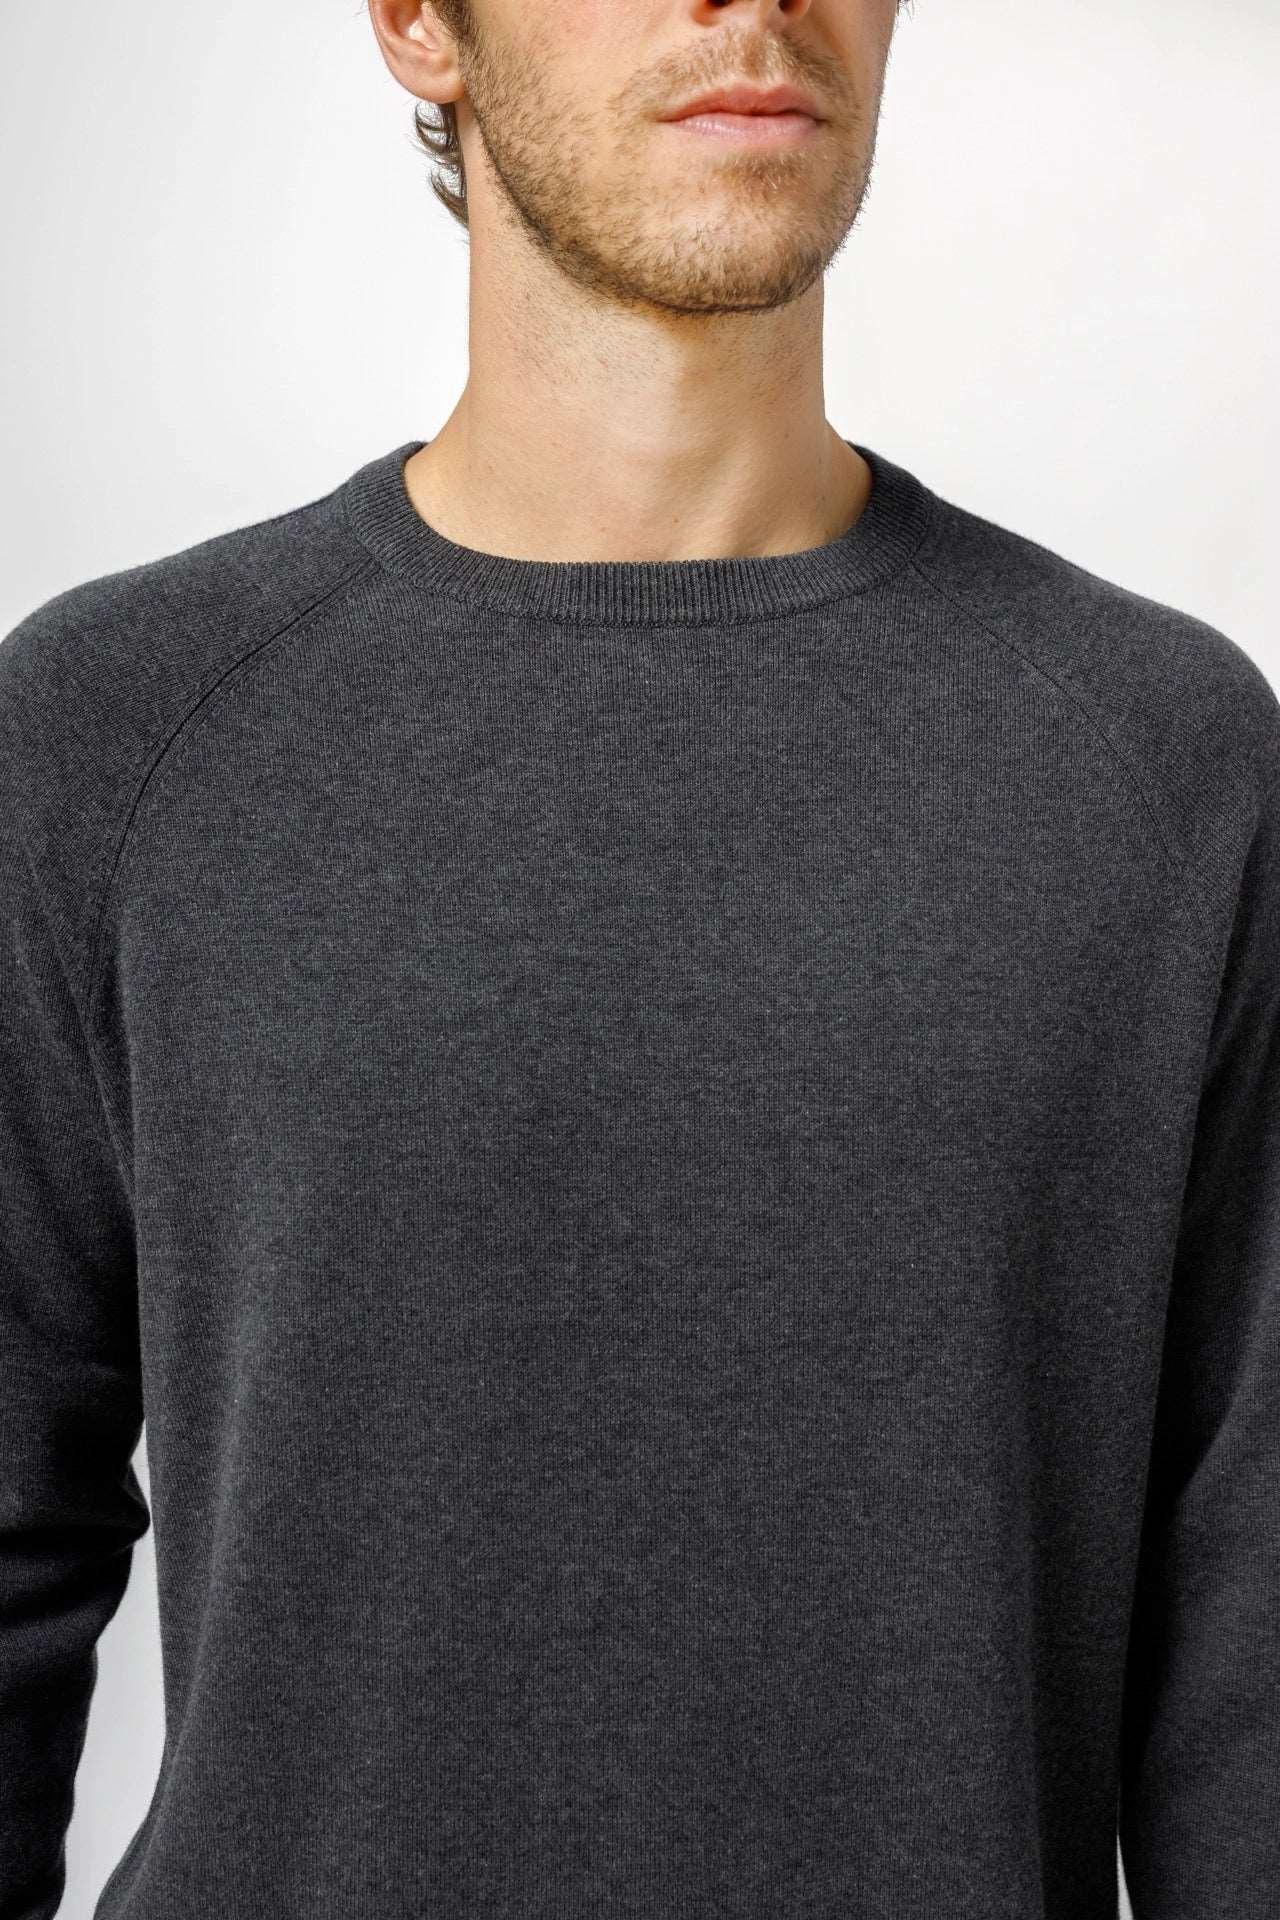 Men's Line Accent Crew Neck Sweater